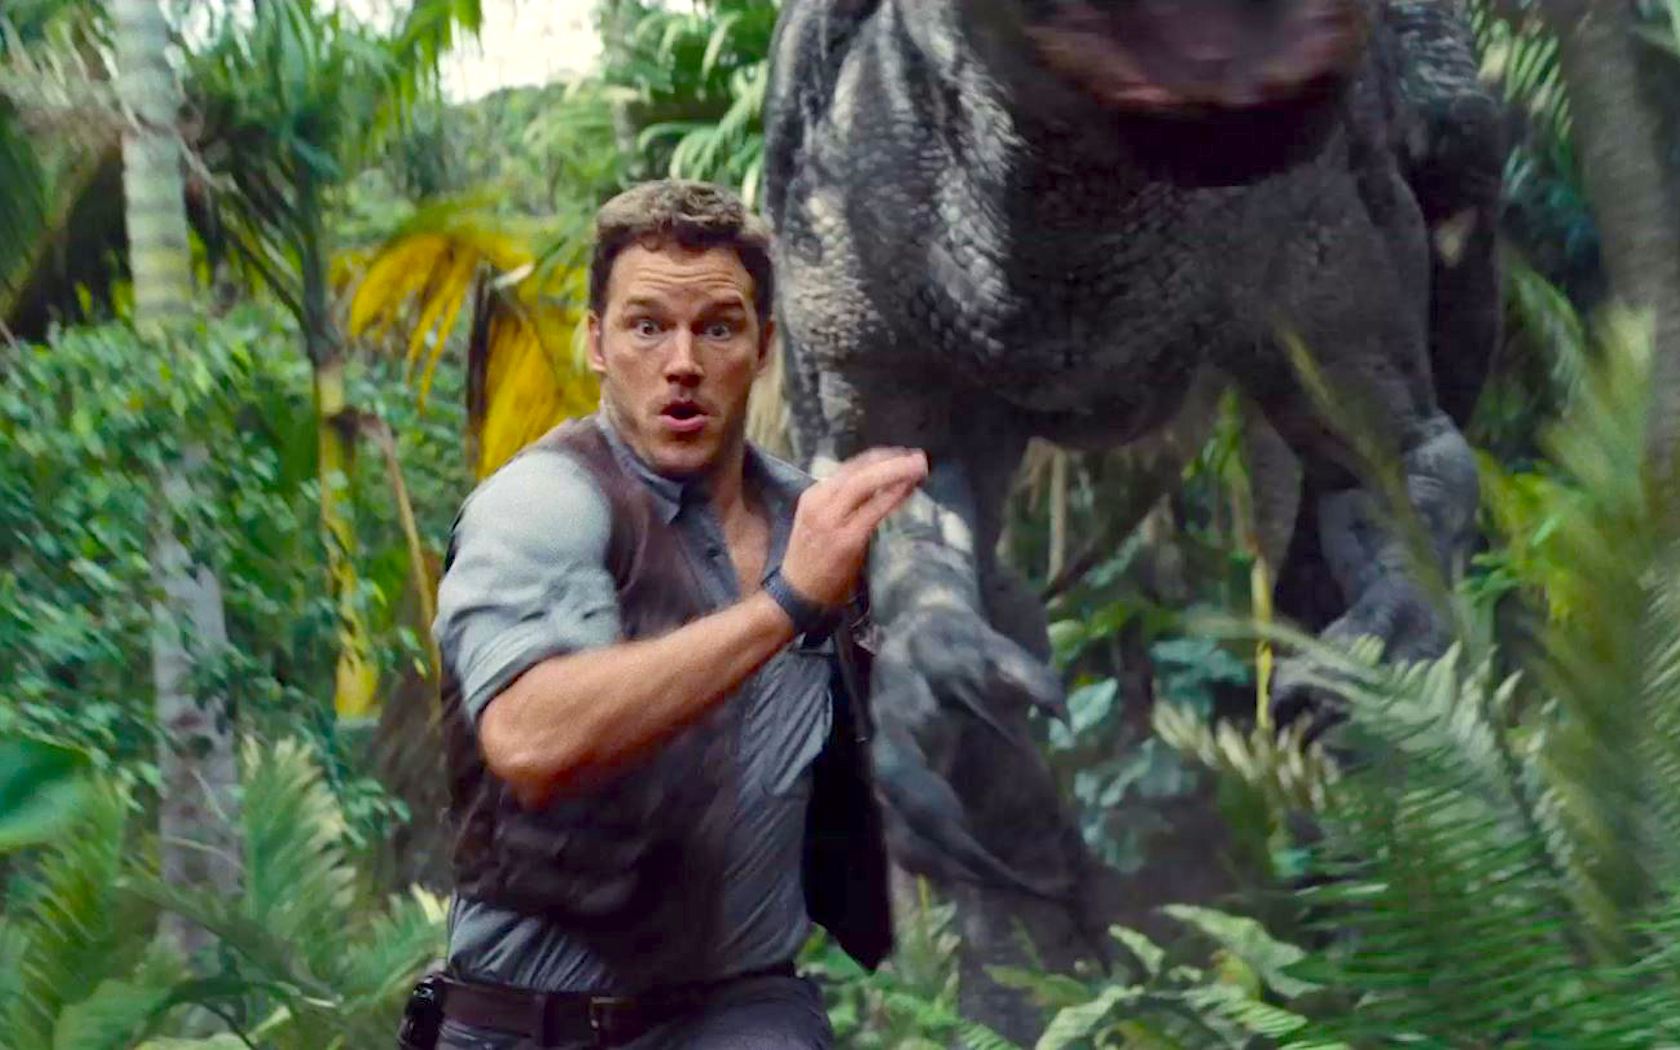 Universal Studios Hollywood Are Hosting A Jurassic World 5k Race